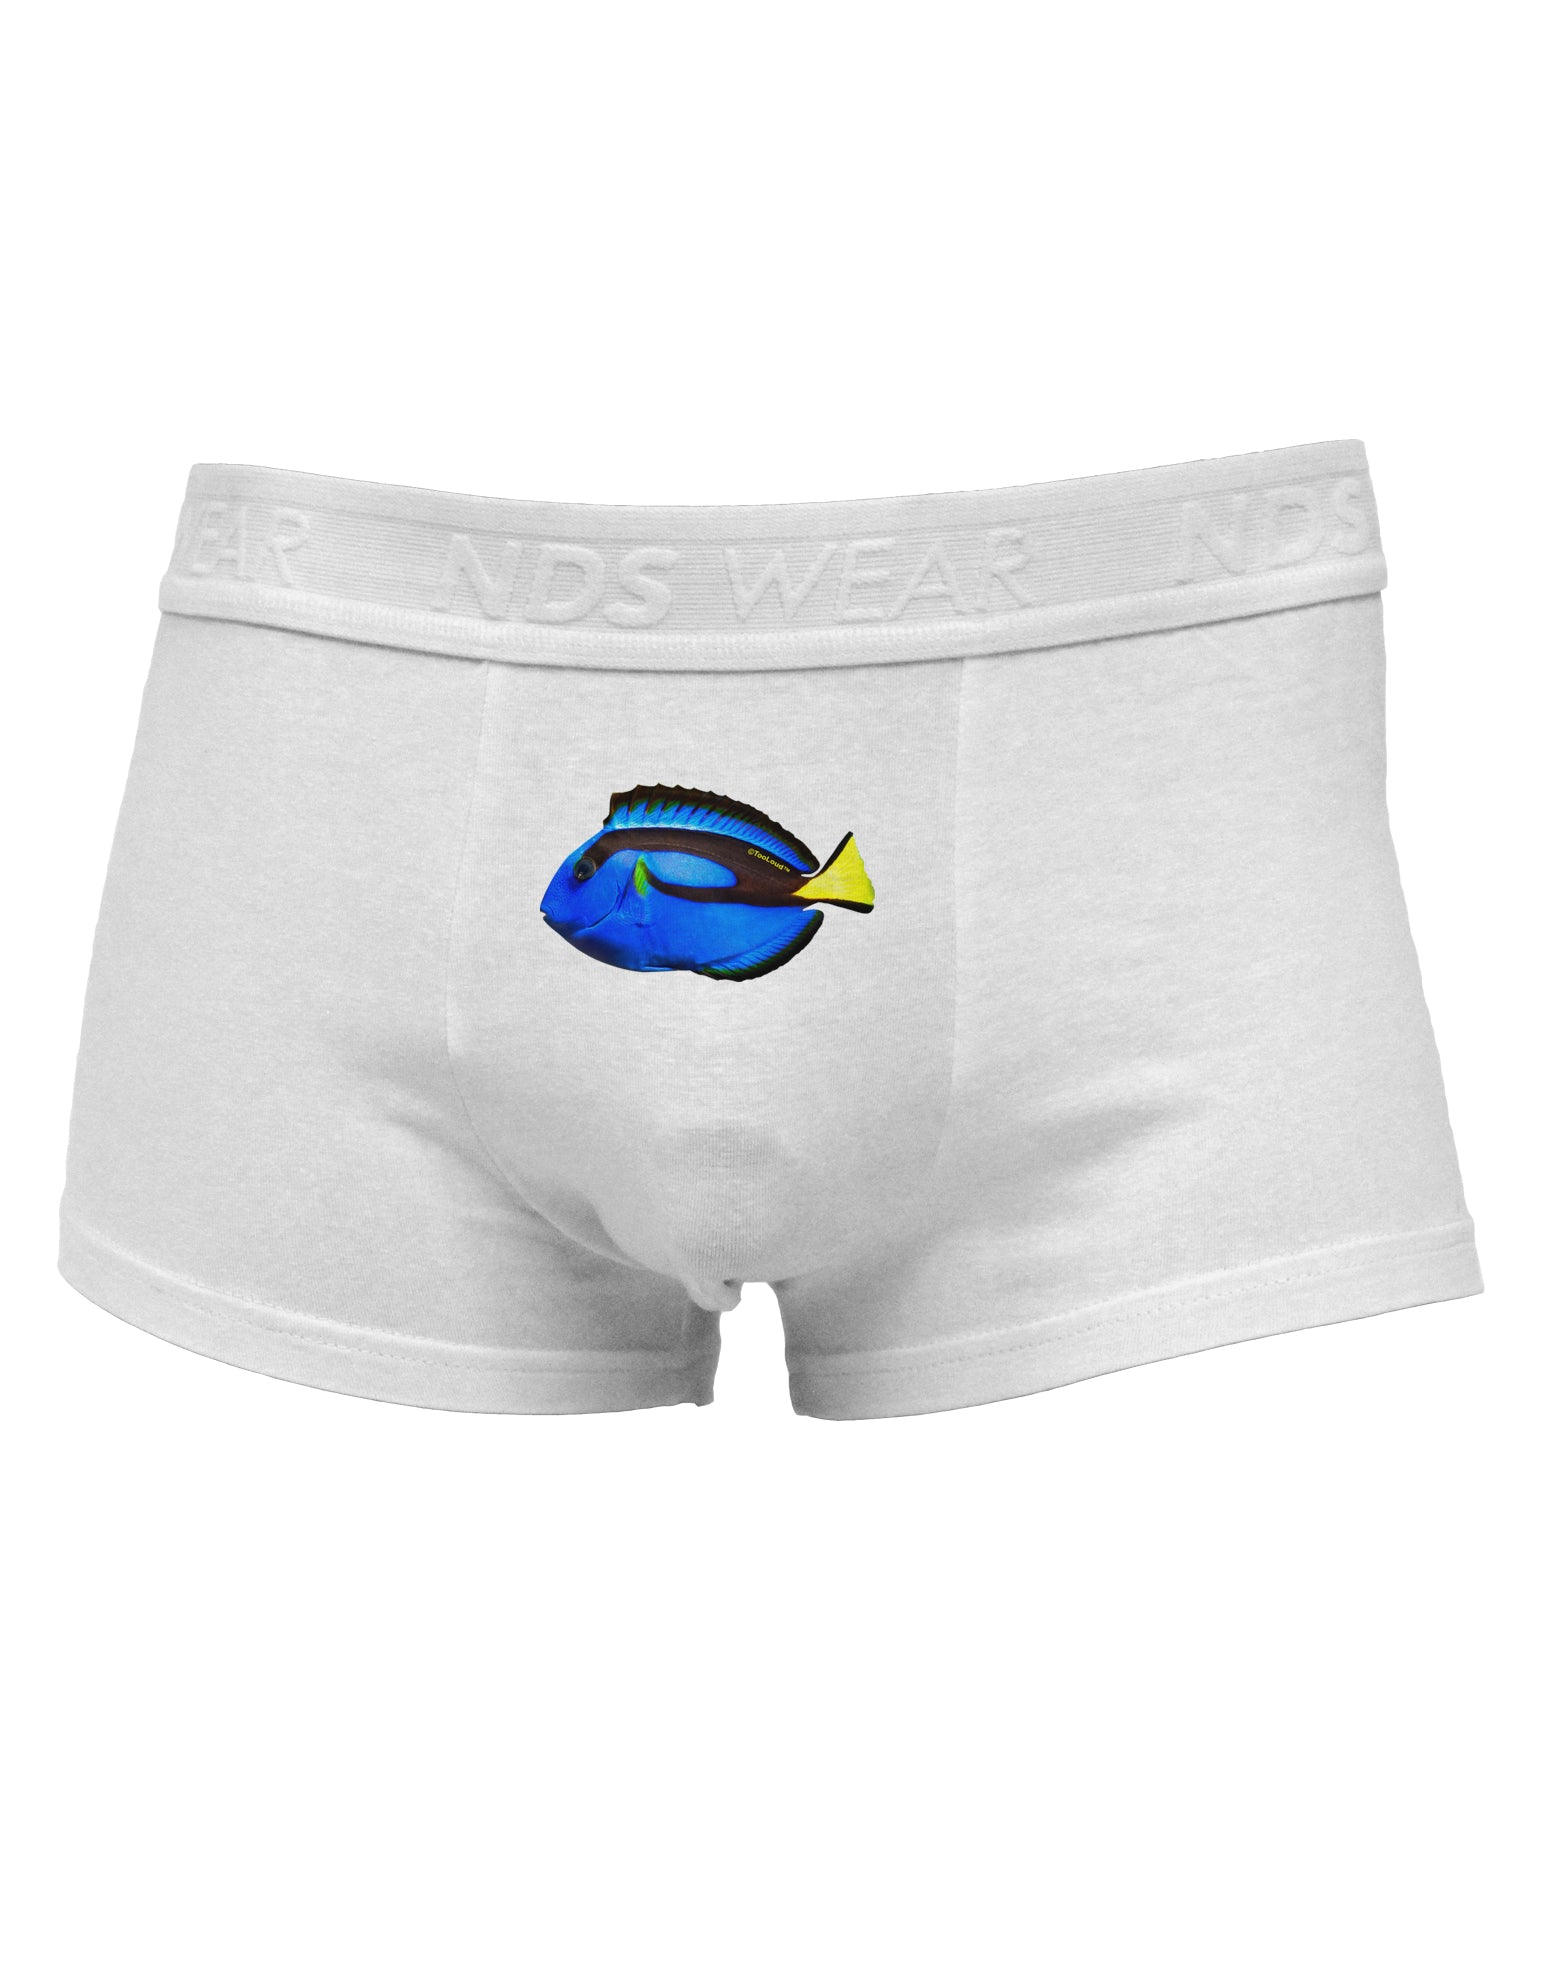 Blue Tang Fish Mens Cotton Trunk Underwear - Davson Sales